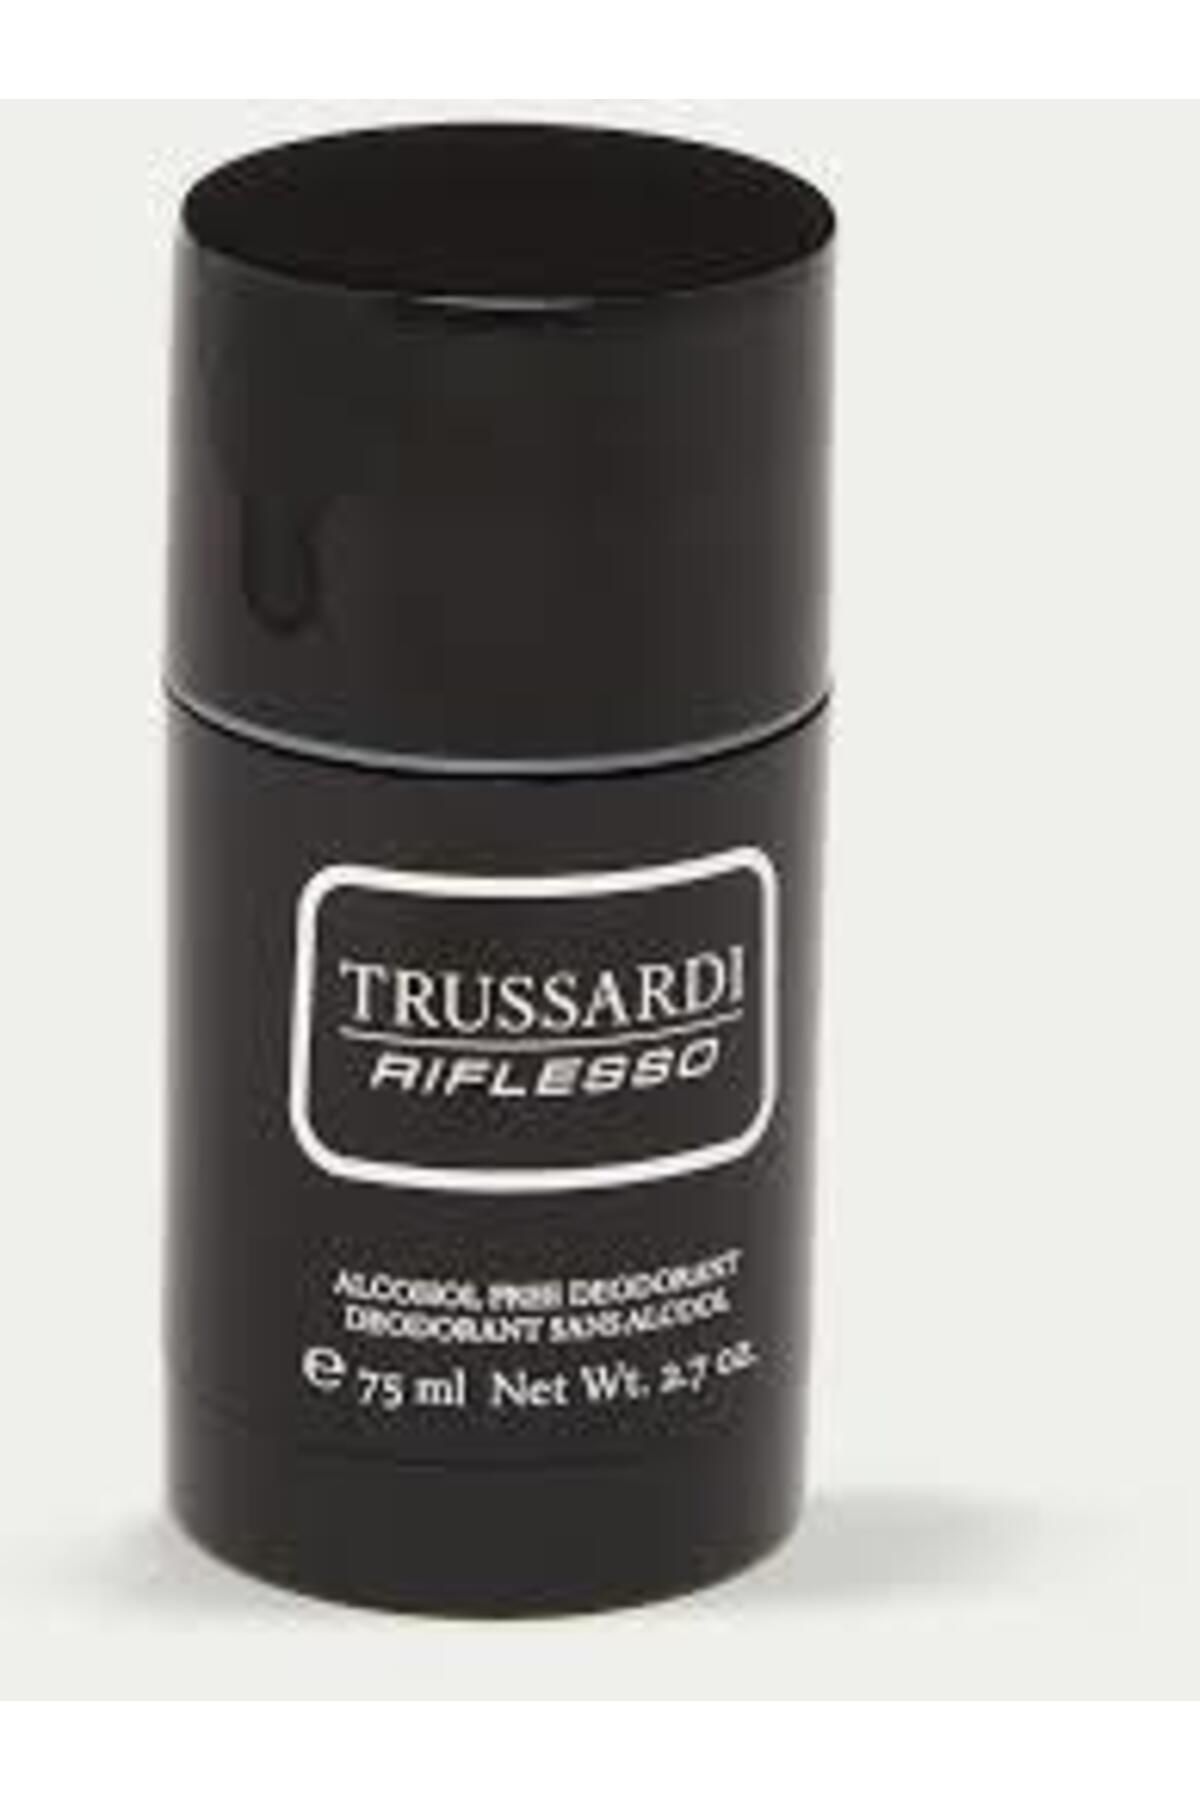 Trussardi Riflesso Deostick 75 ml